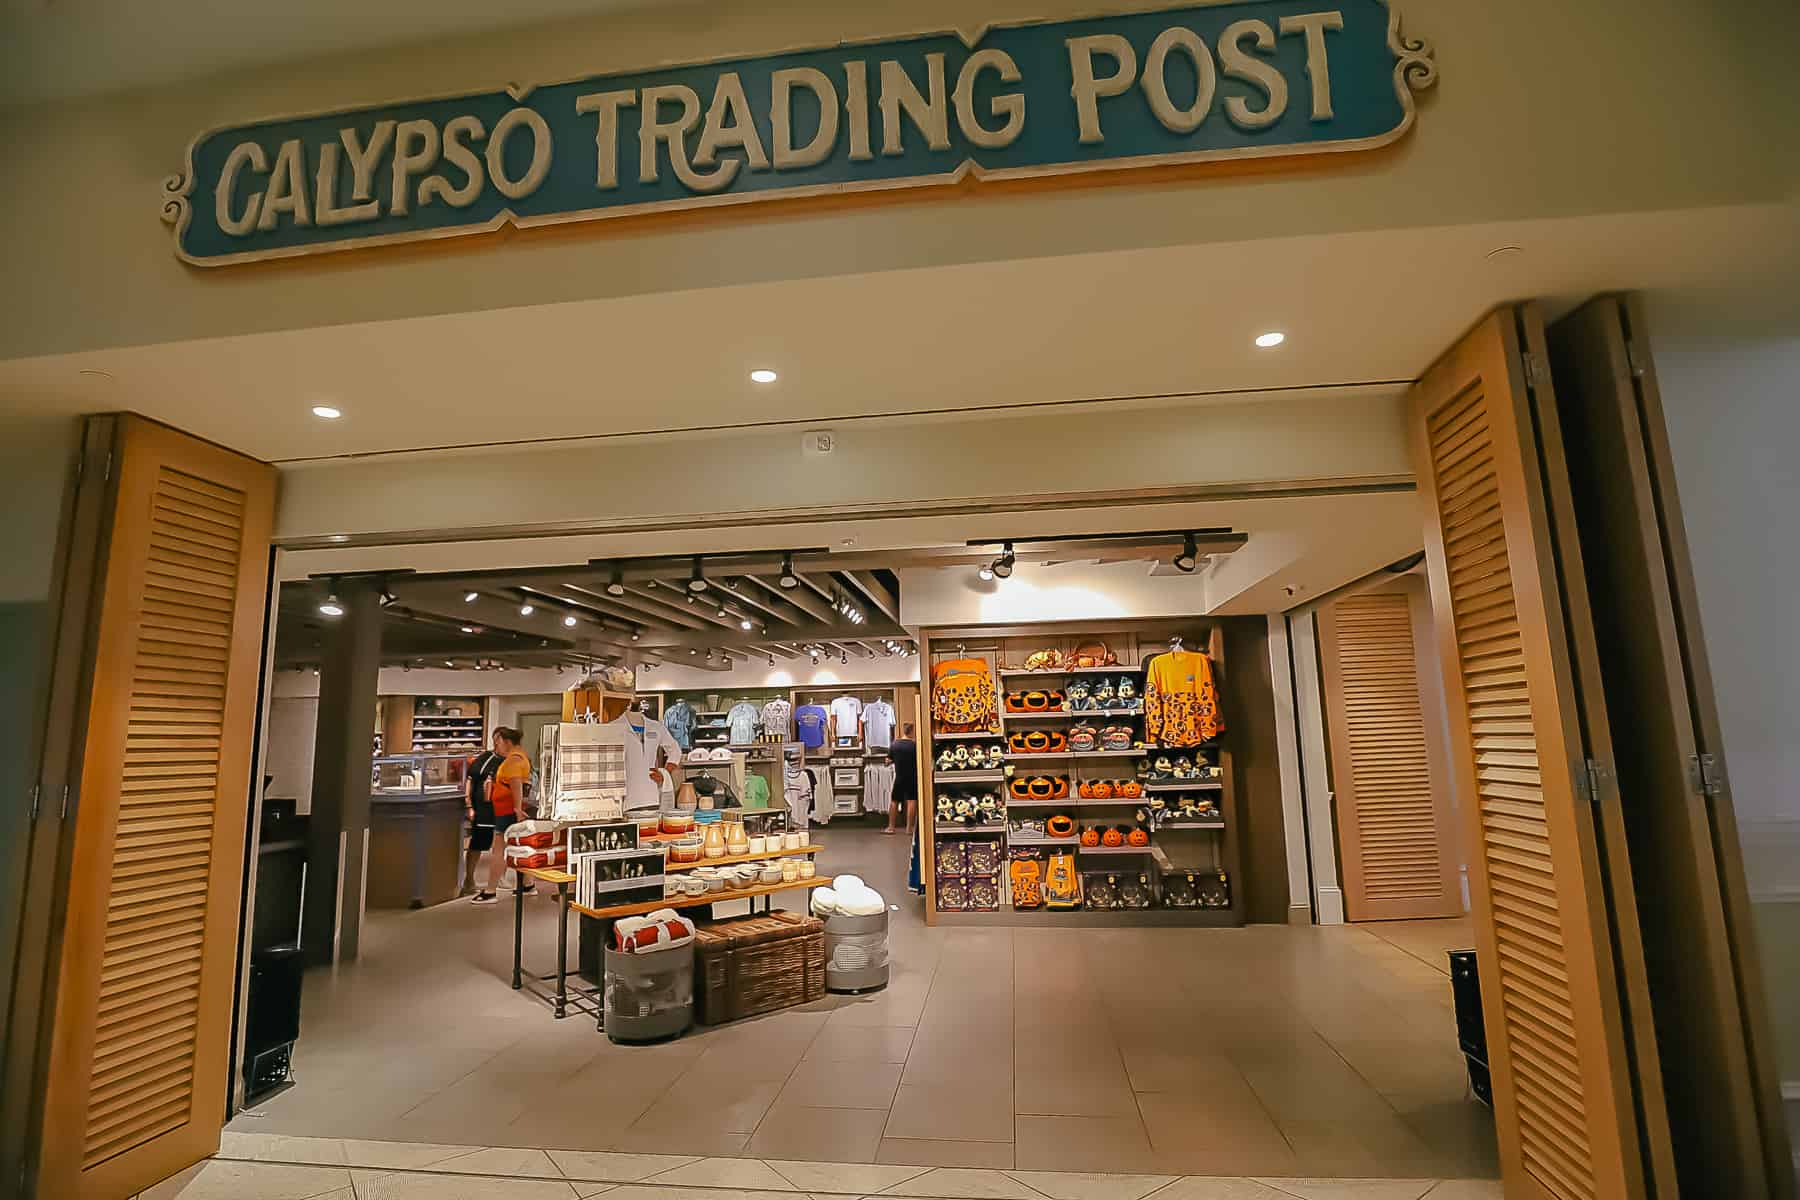 Photos: Calypso Trading Post with Resort Branded Merchandise